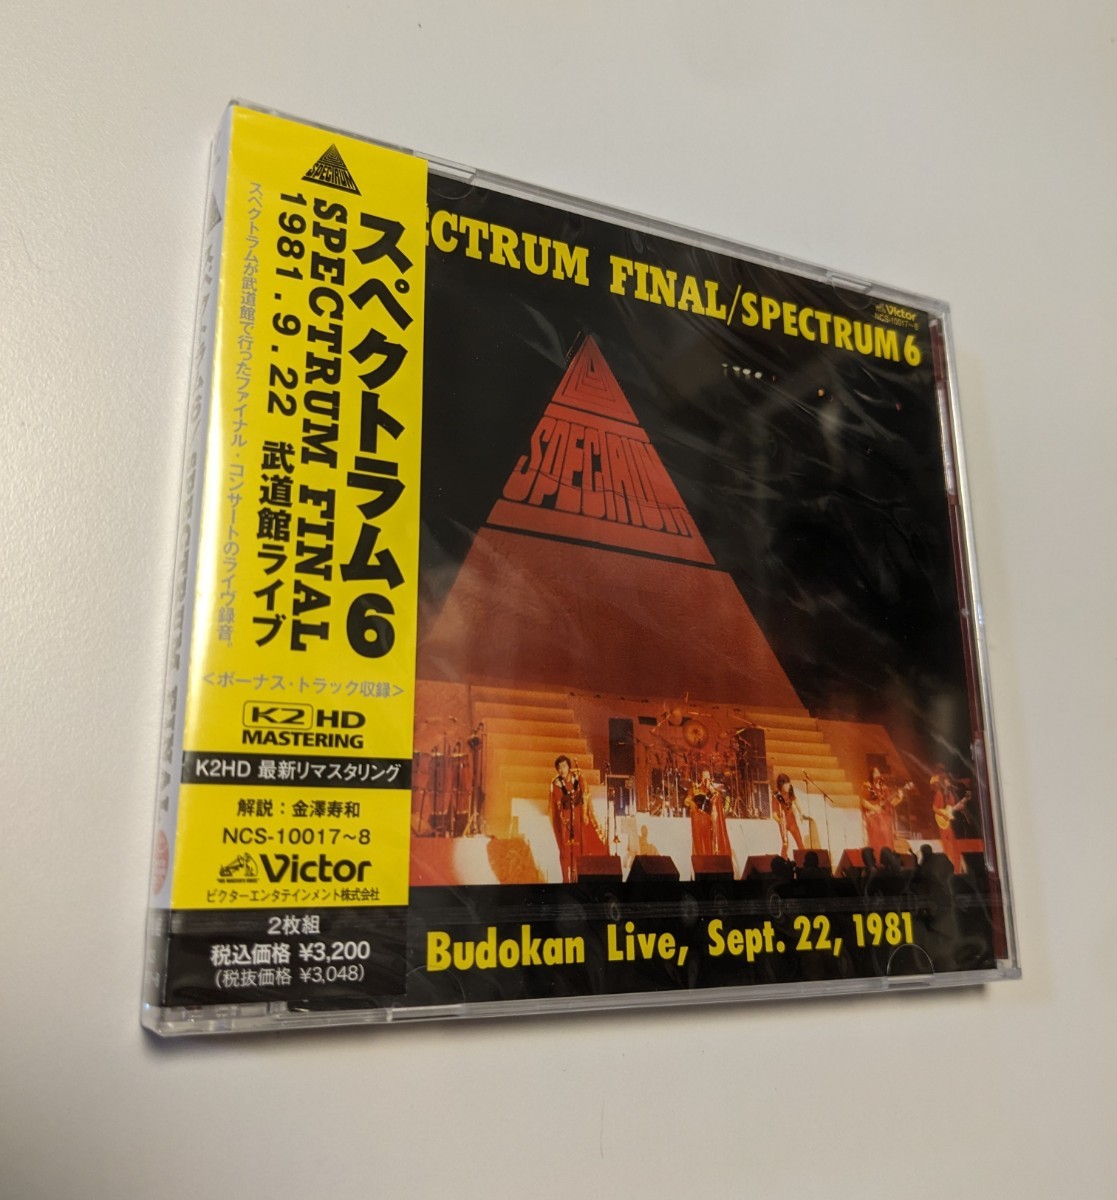 MR 匿名配送 2CD スペクトラム SPECTRUM FINAL Budokan Live, Sept.22,1981 (+4)/SPECTRUM 6 タワーレコード限定 4988002654420_画像1